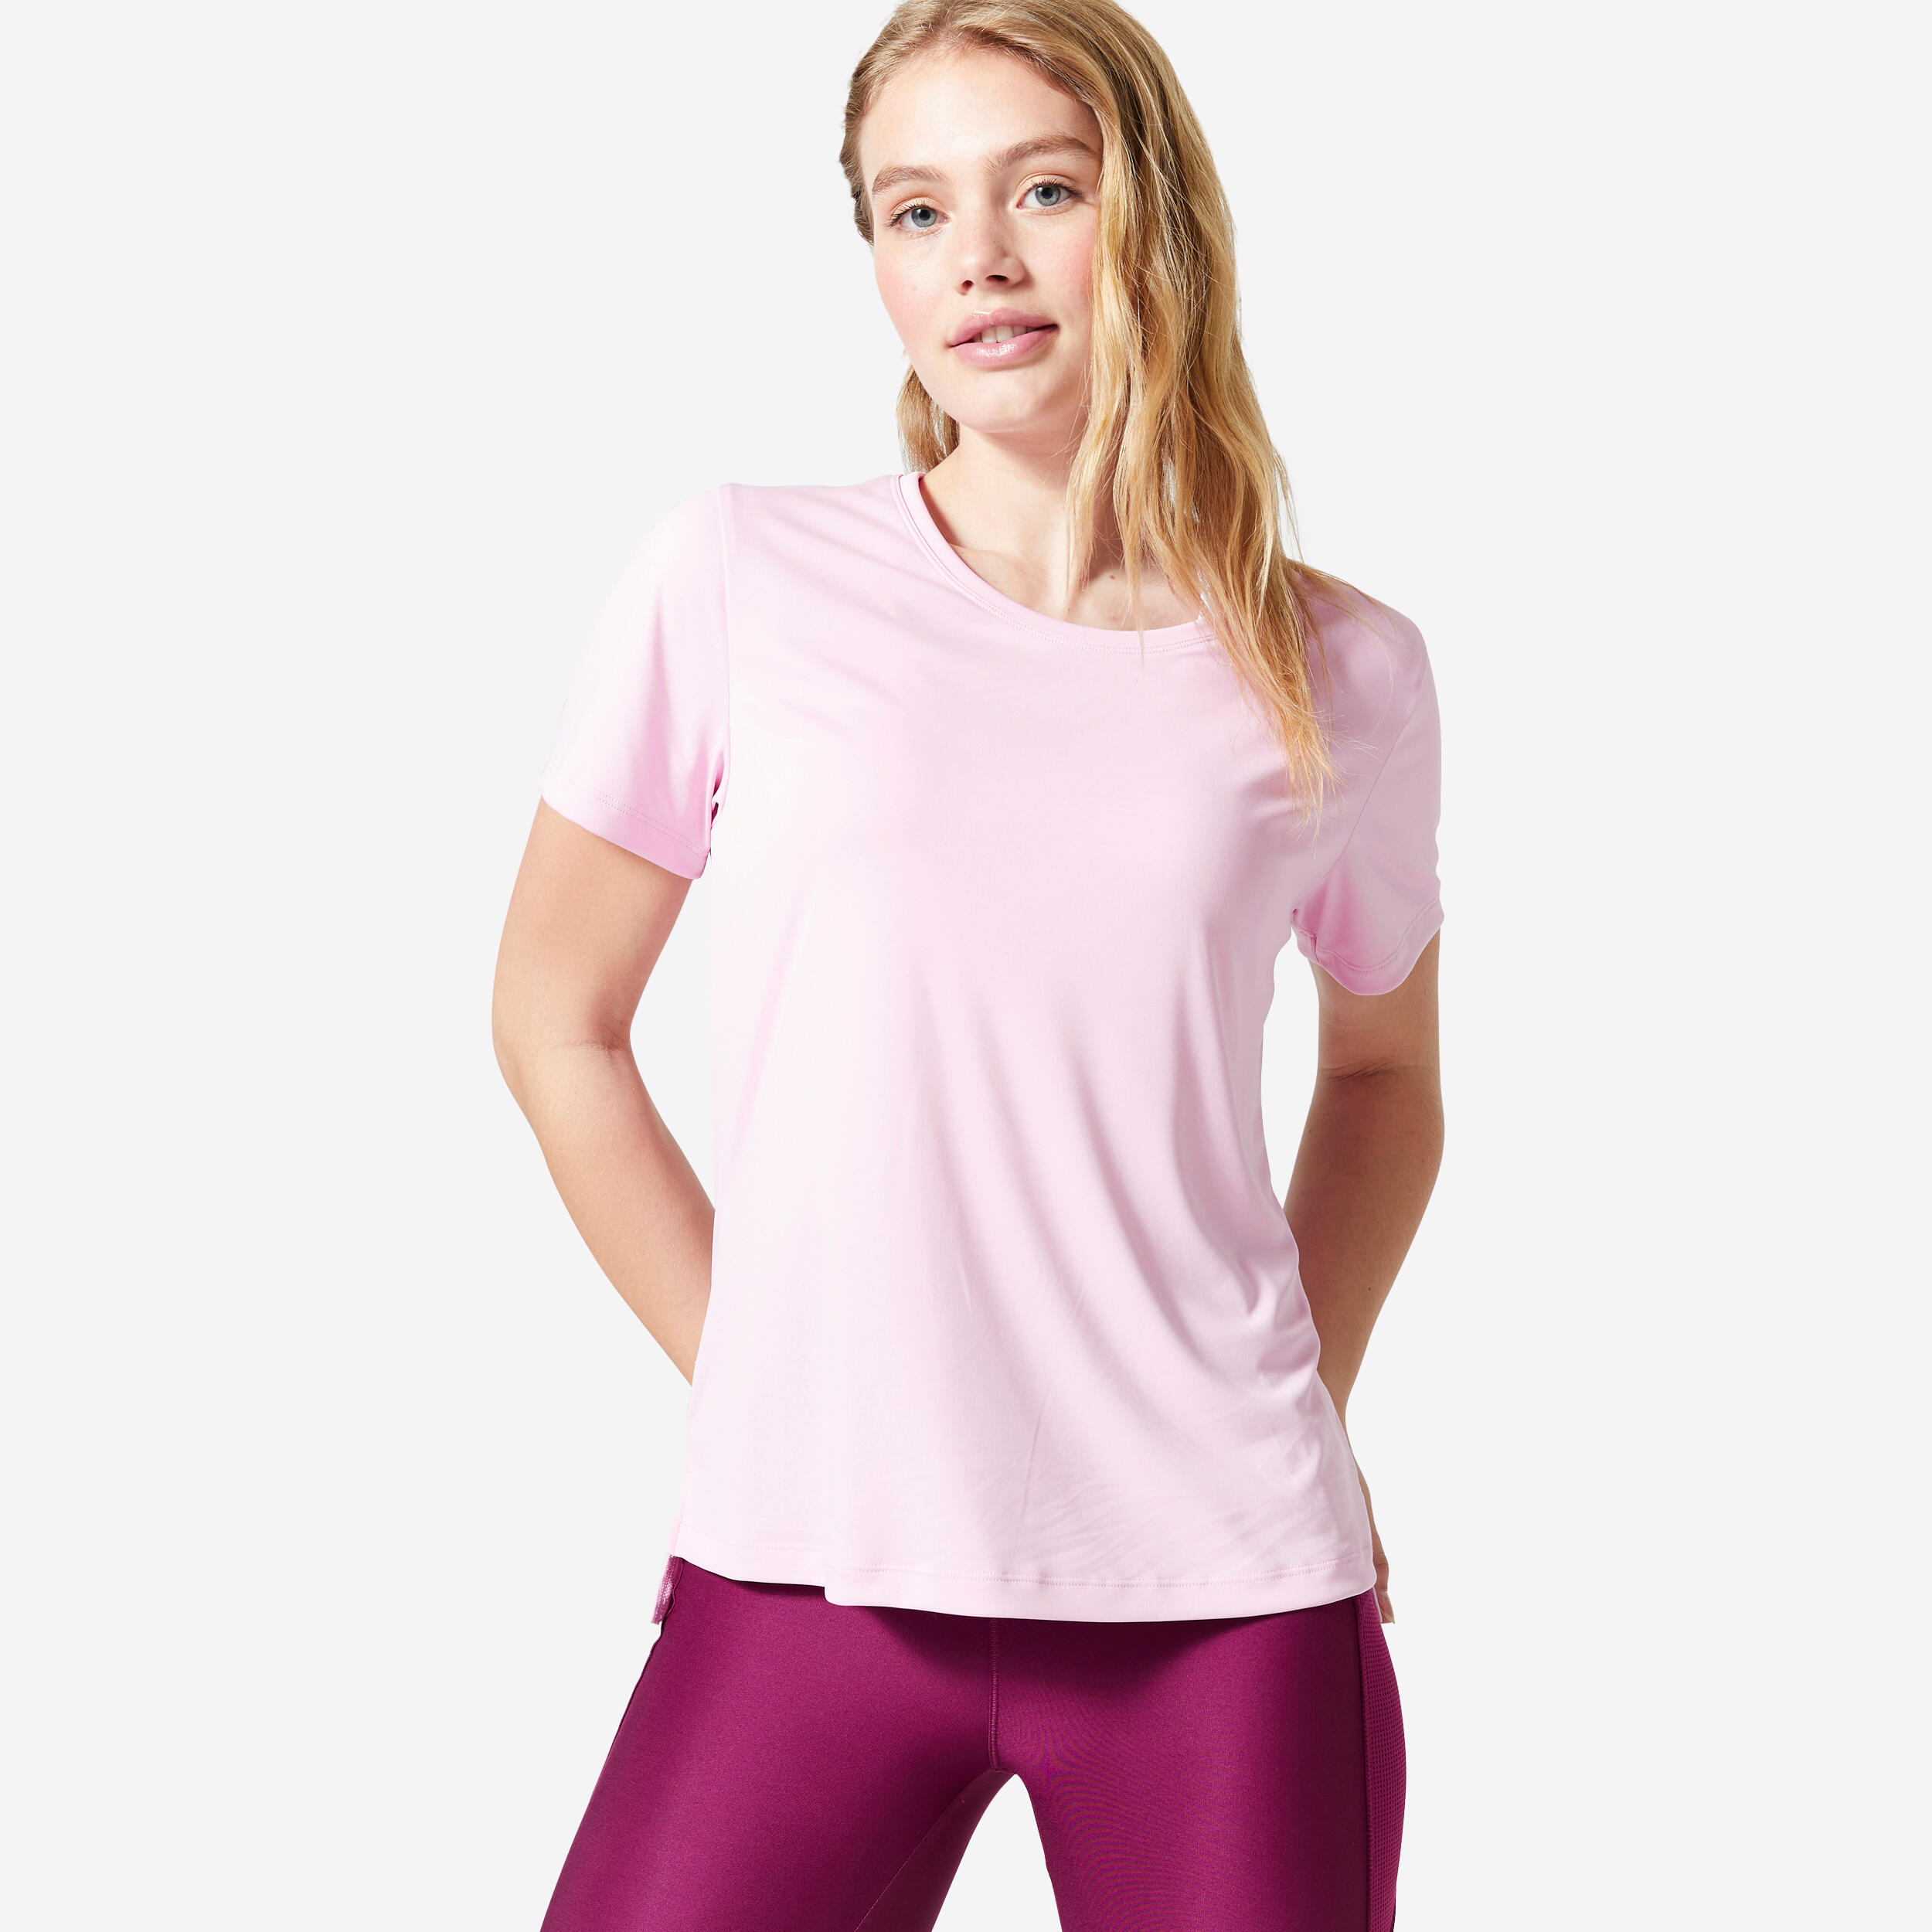 DOMYOS Women's Short-Sleeved Cardio Fitness T-Shirt - Light Pink